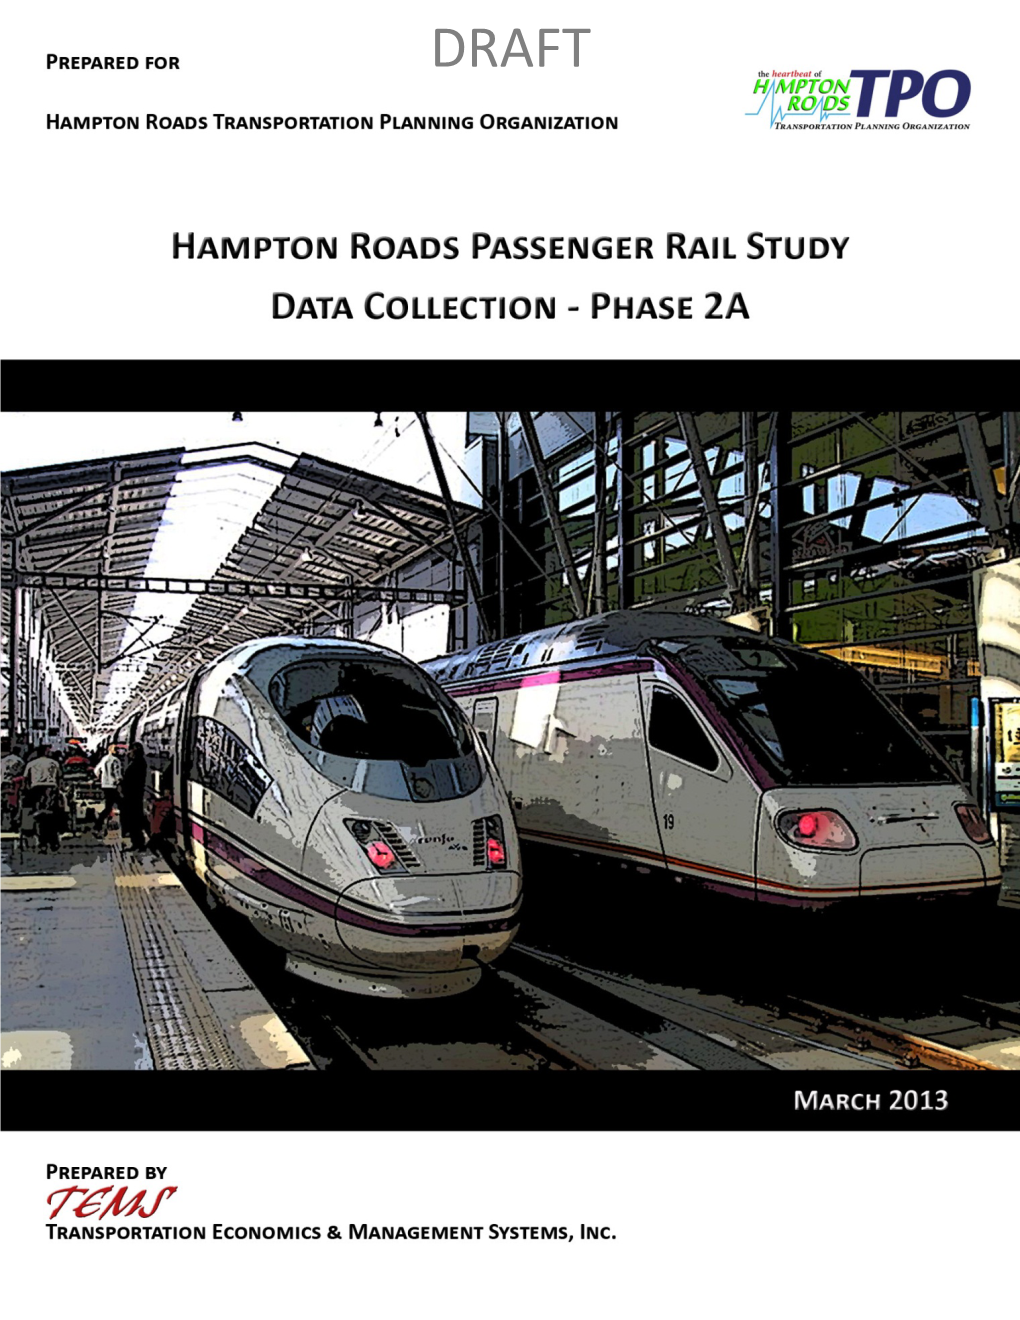 Hampton Roads Passenger Rail Study: Data Collection (For the Norfolk-Richmond Route)